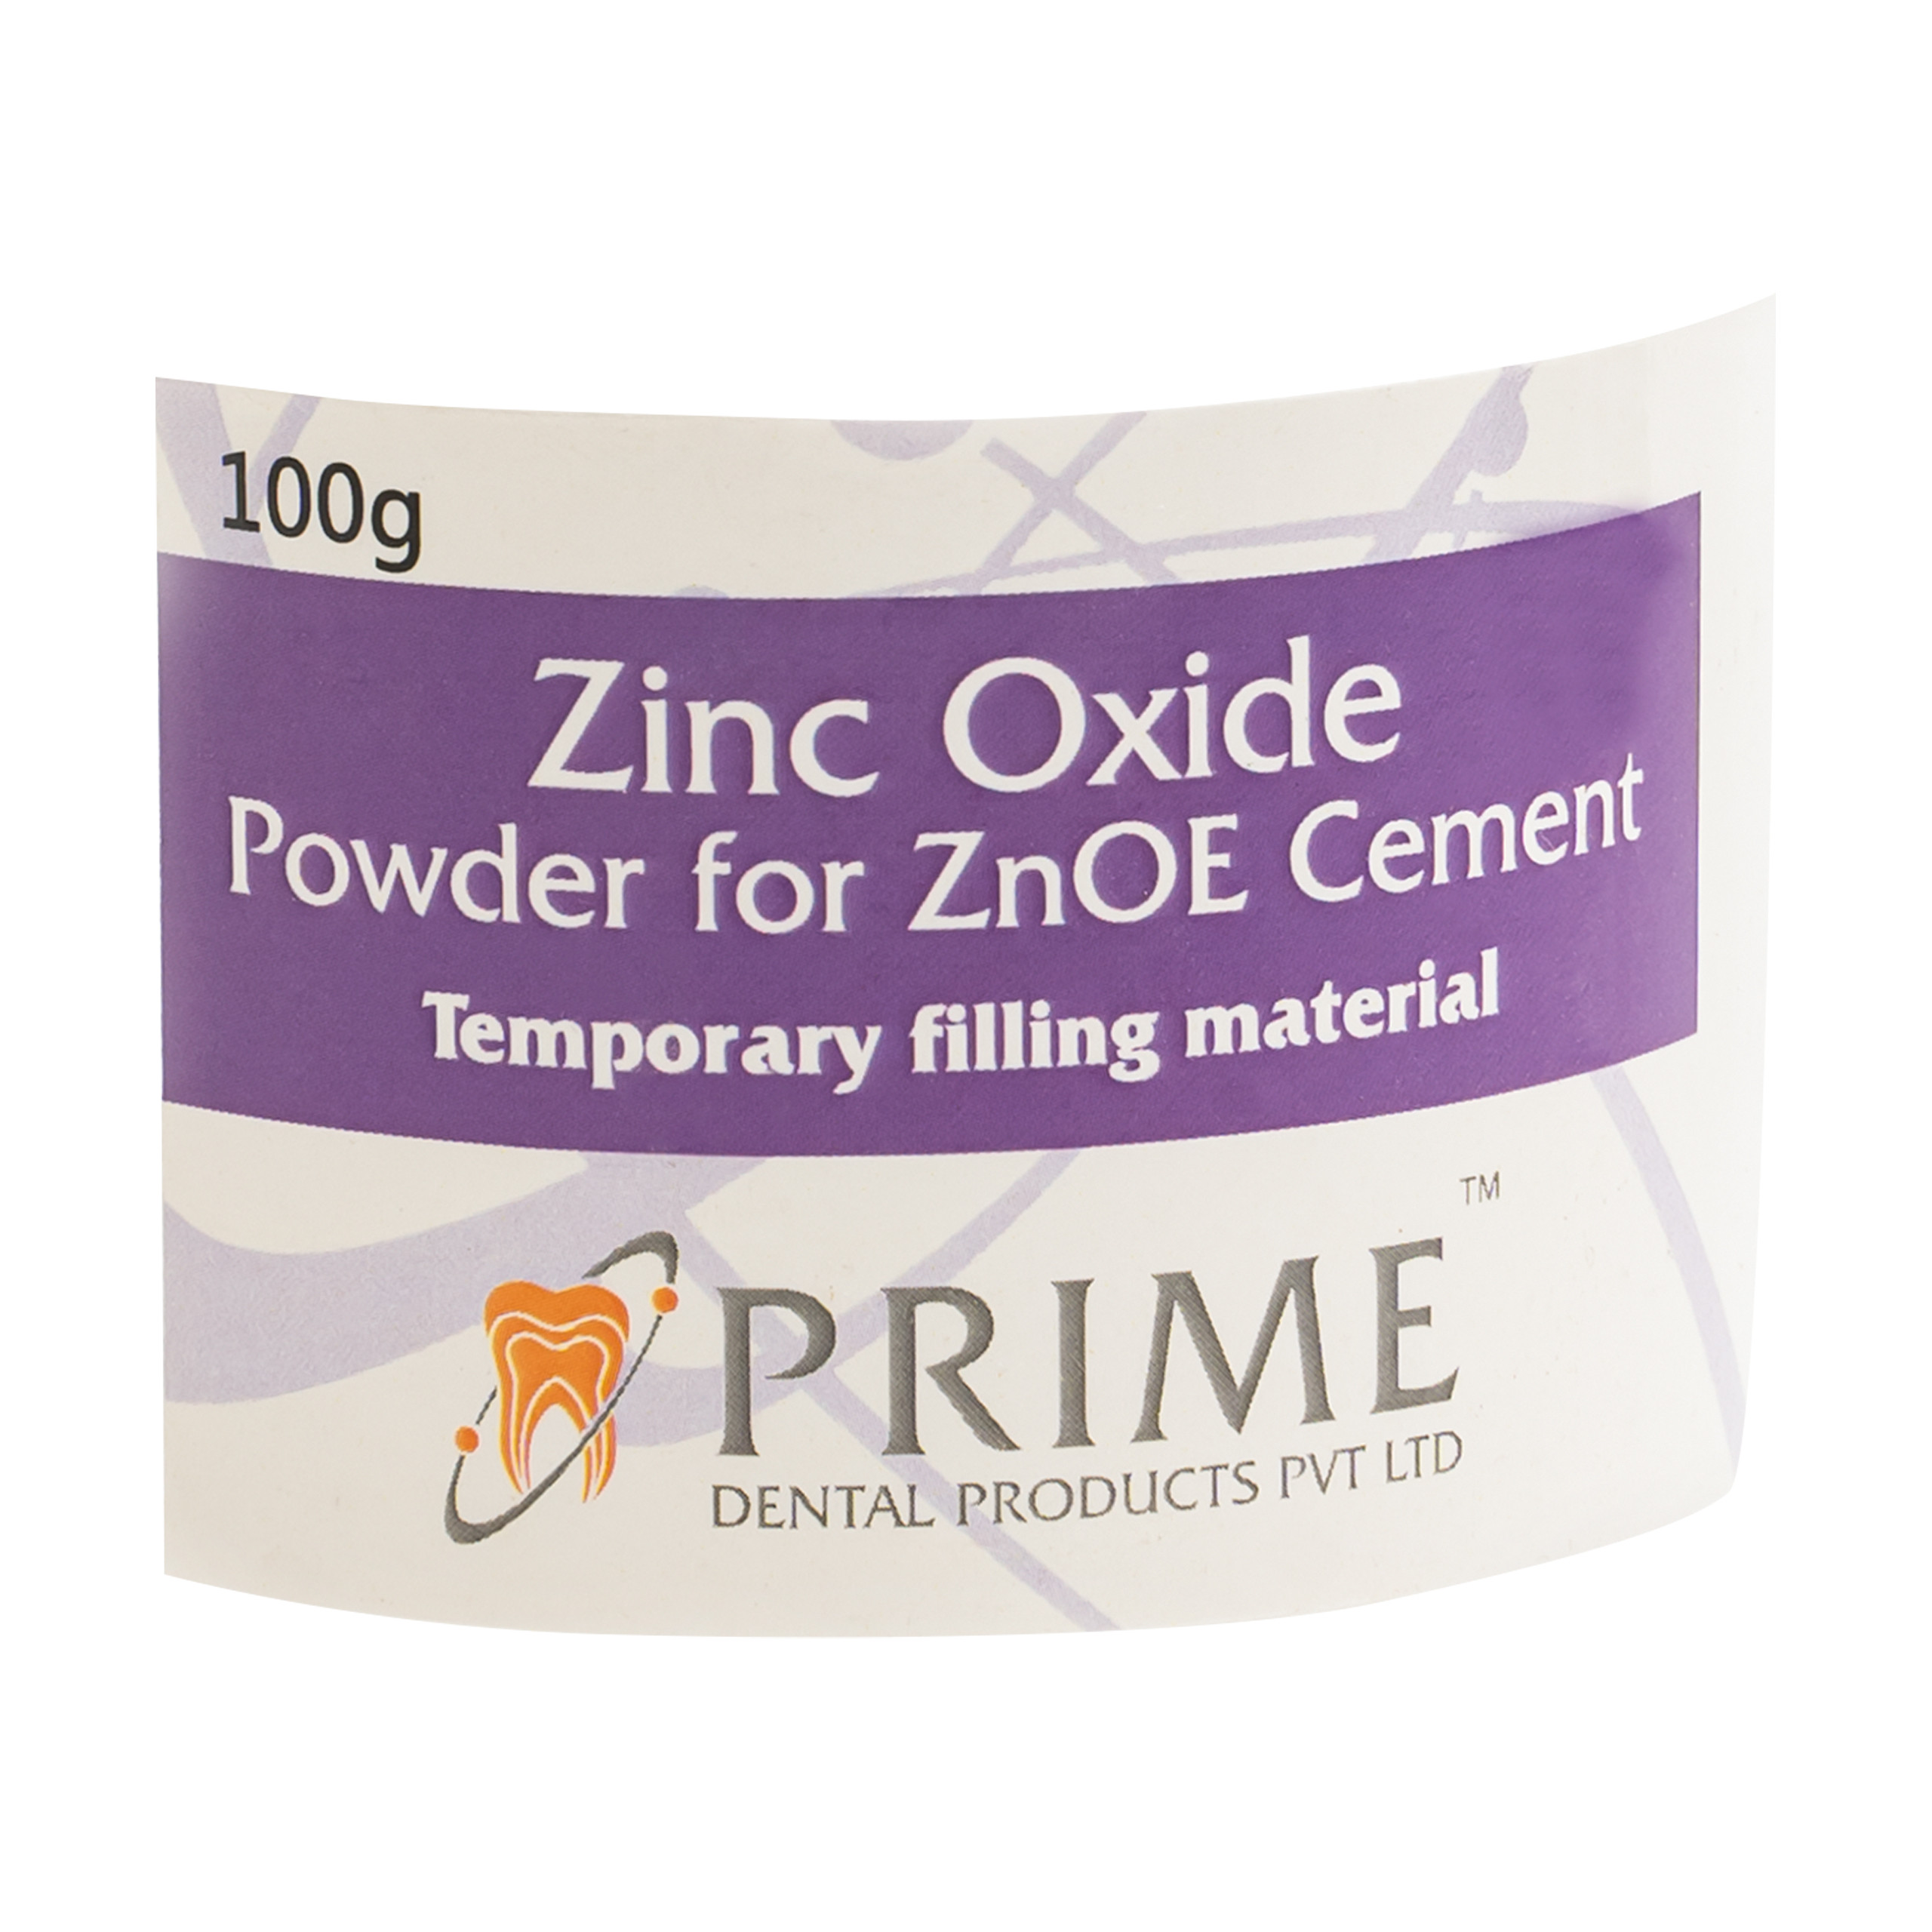 Prime Dental Zinc Oxide